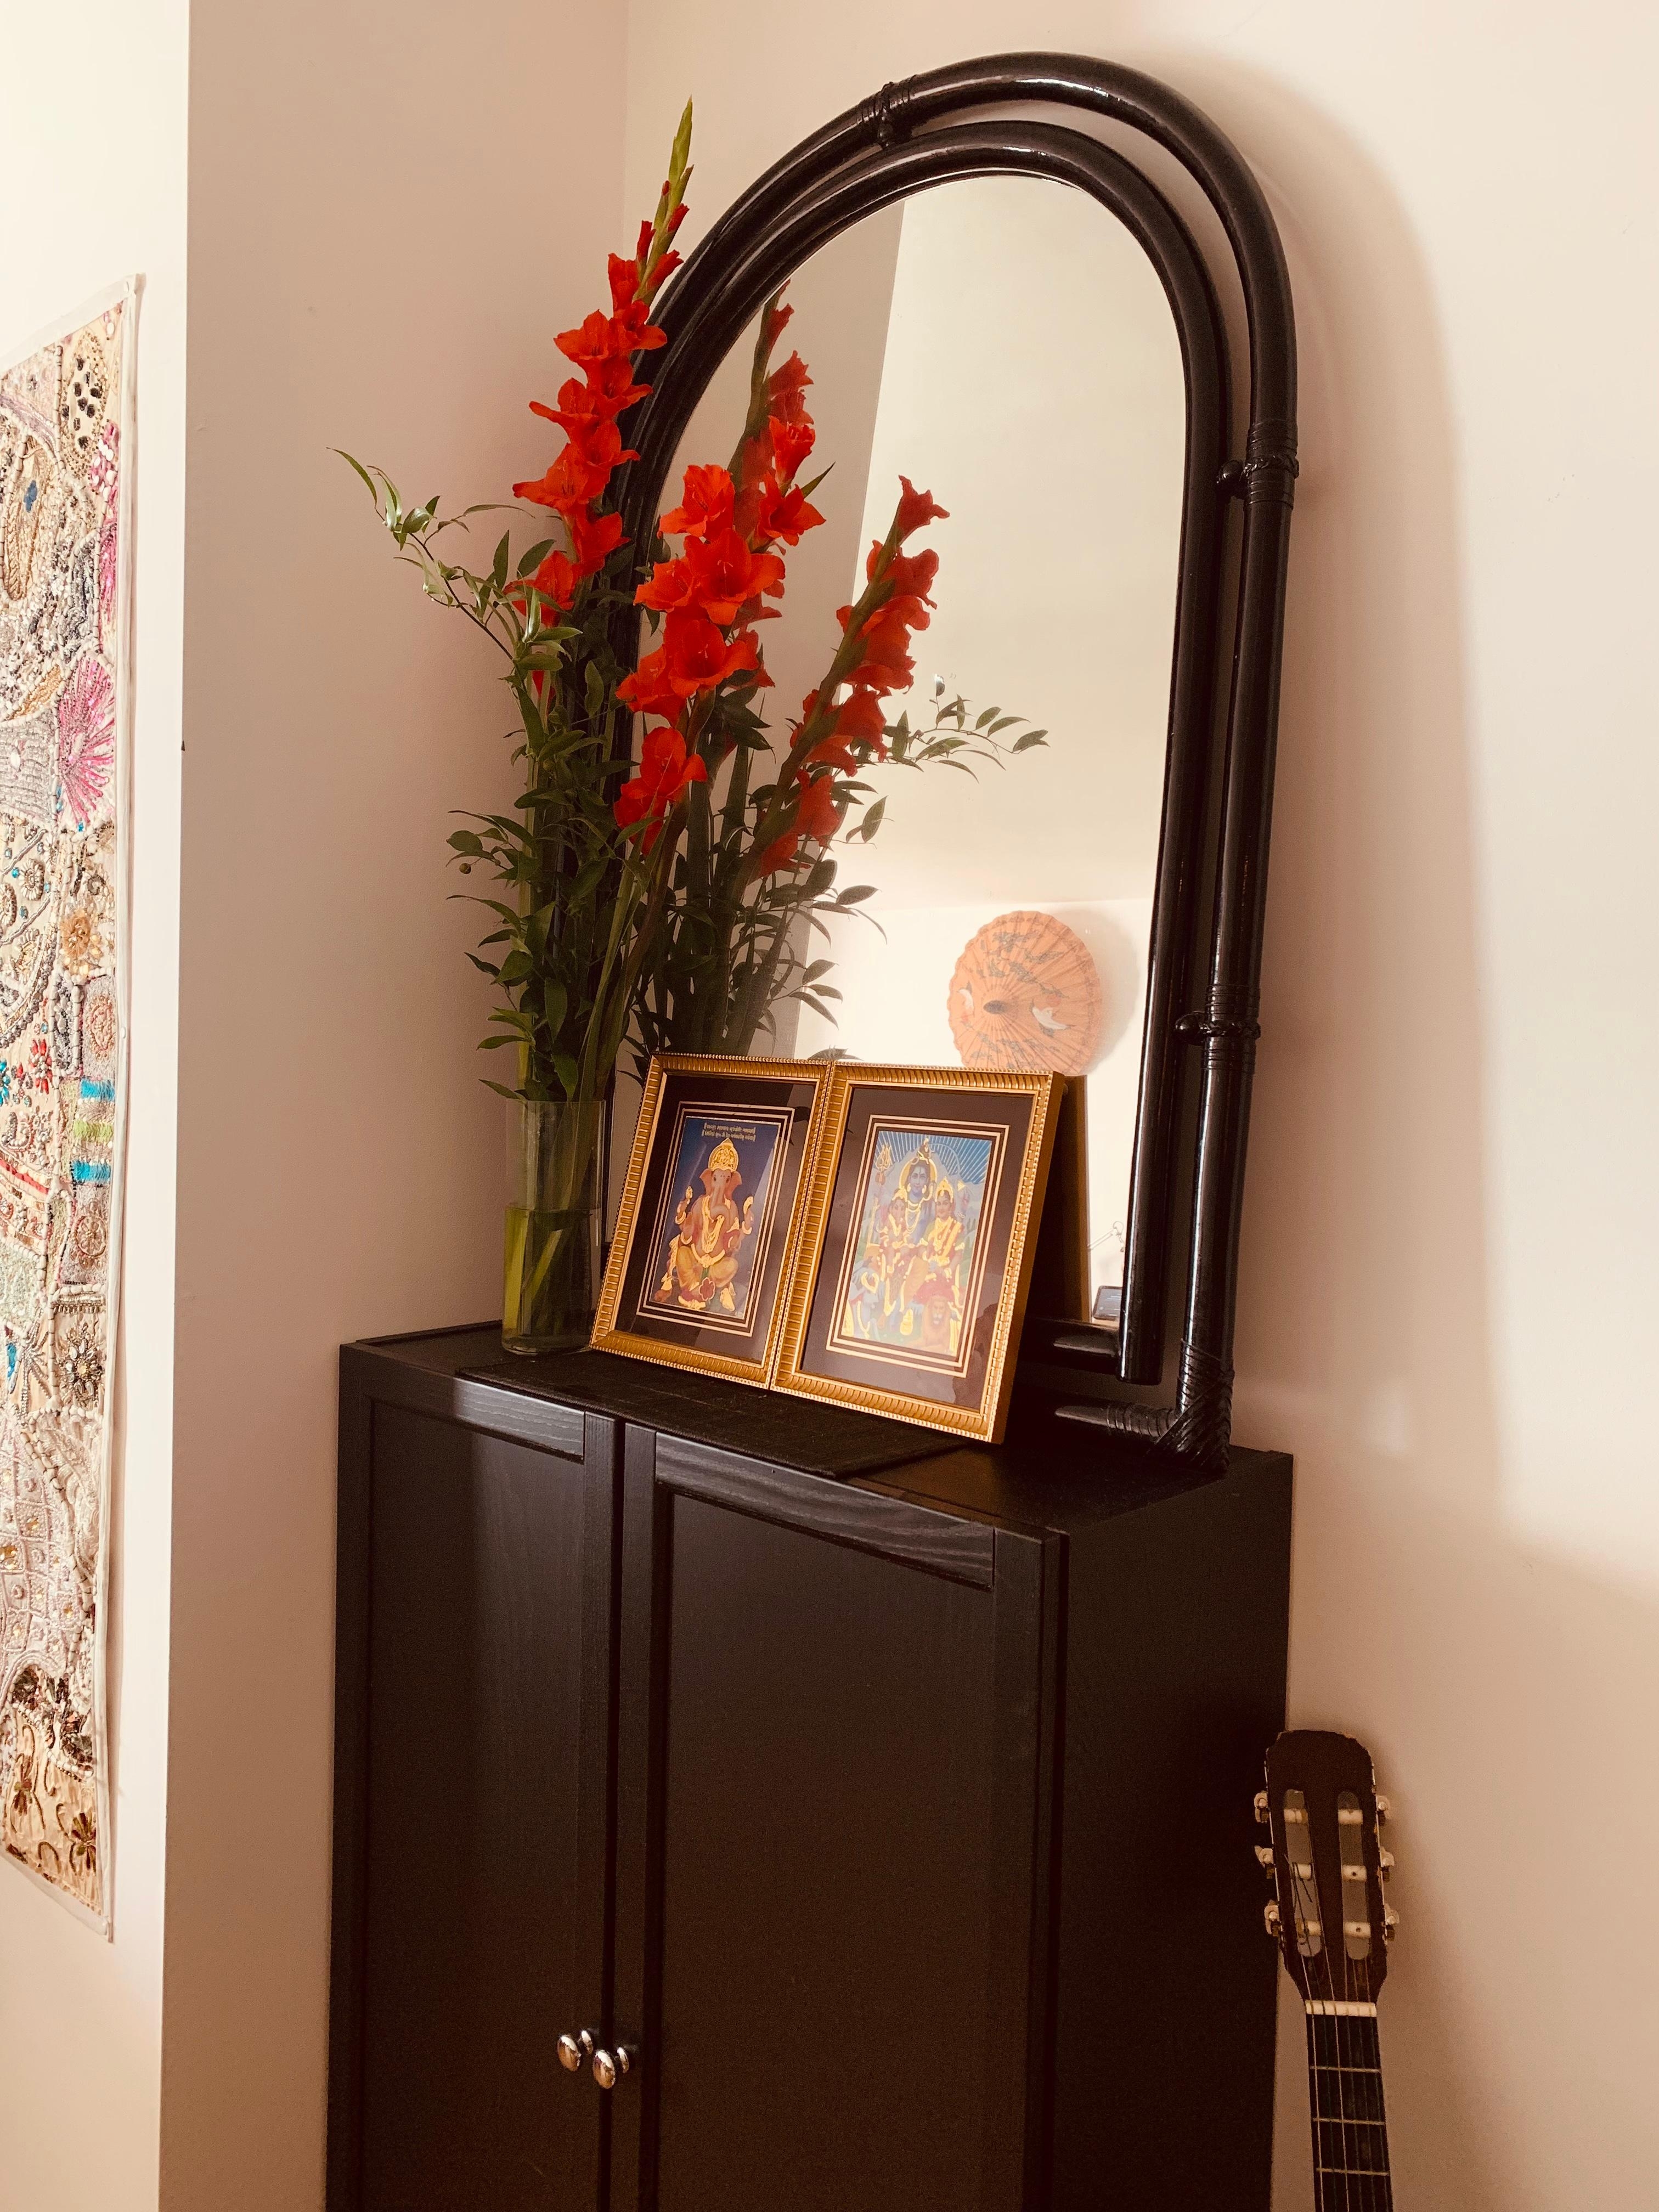 when every little corner is blooming ...
#gladiolen #redflowers #mirror #rattanlove